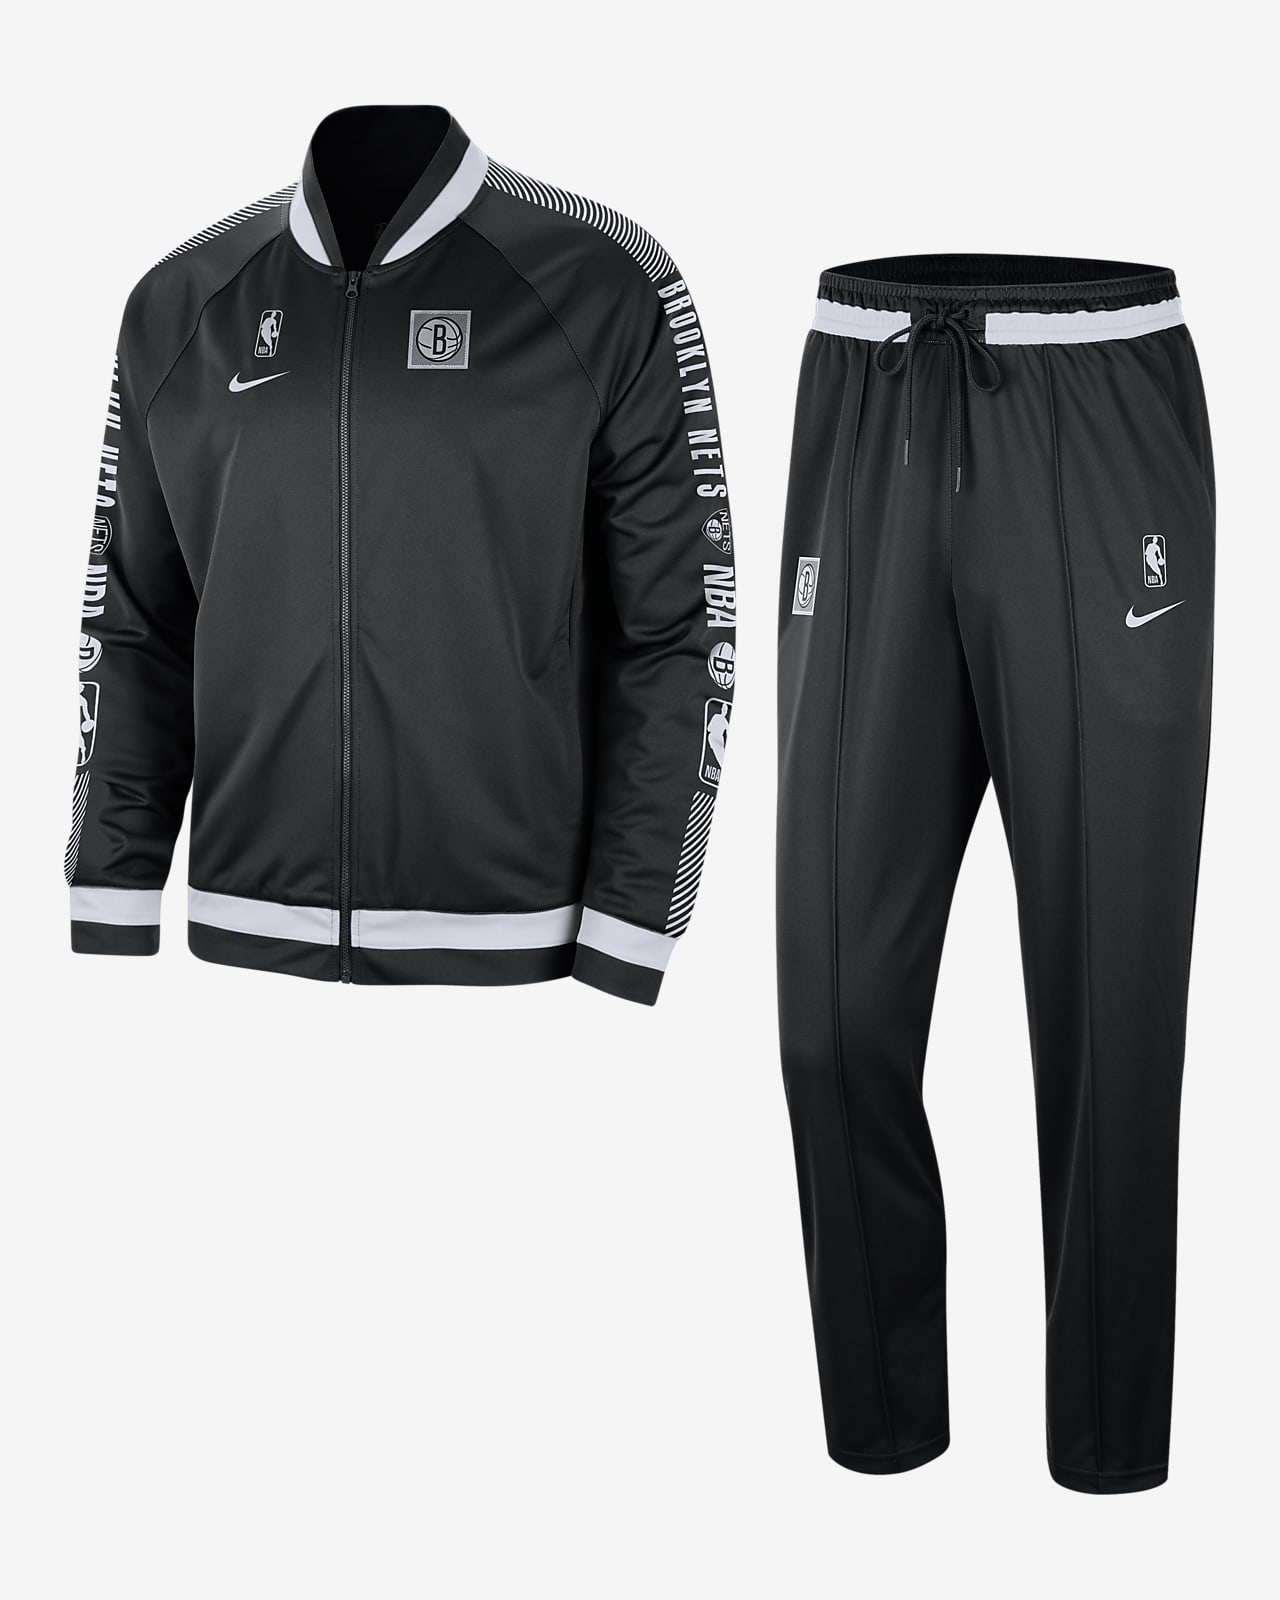 Hommes Lifestyle Vêtements. Nike LU